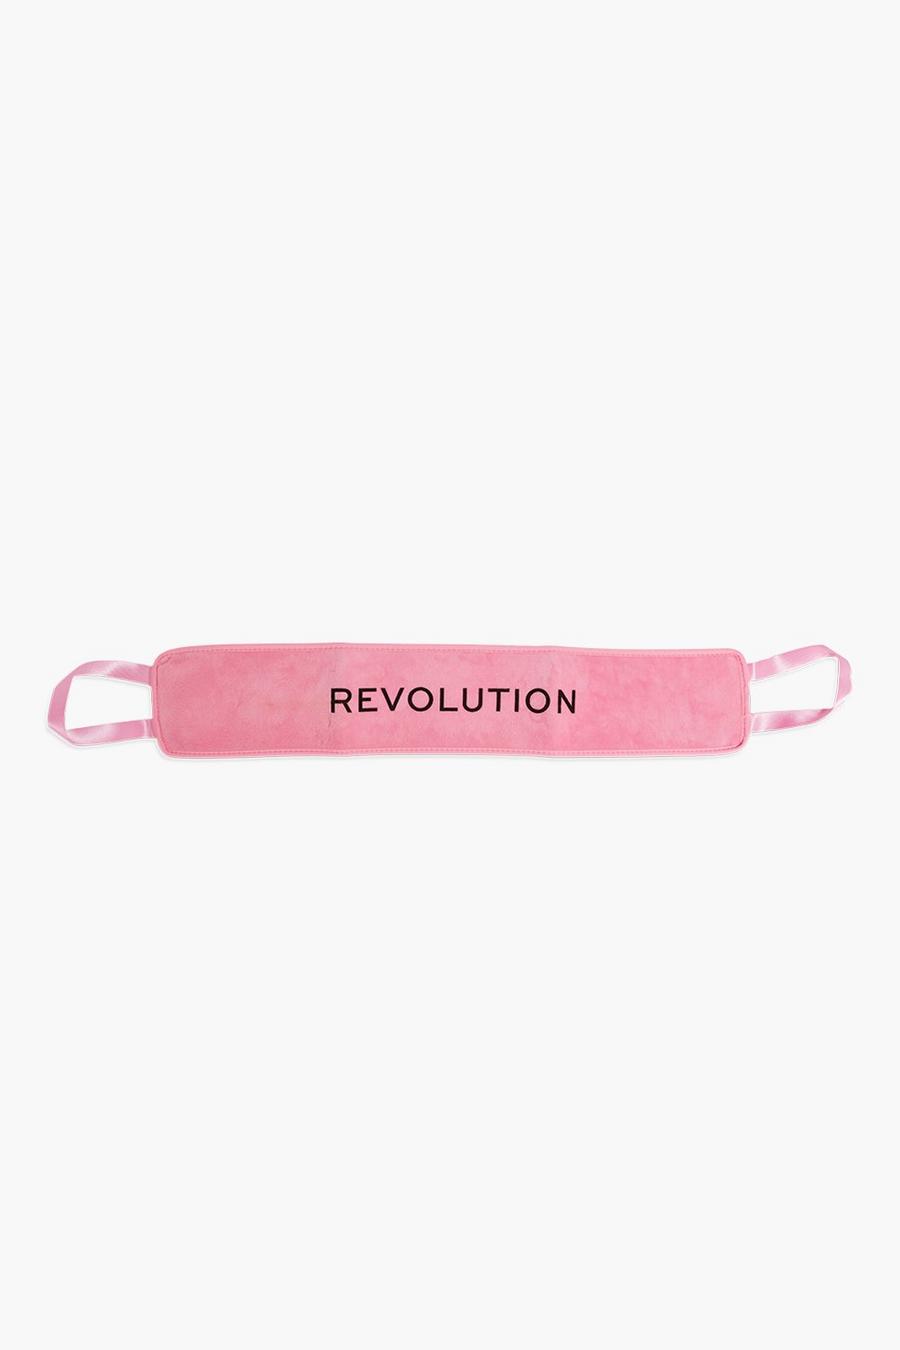 Revolution Beauty Rücken Tanning Handschuh, Pink rose